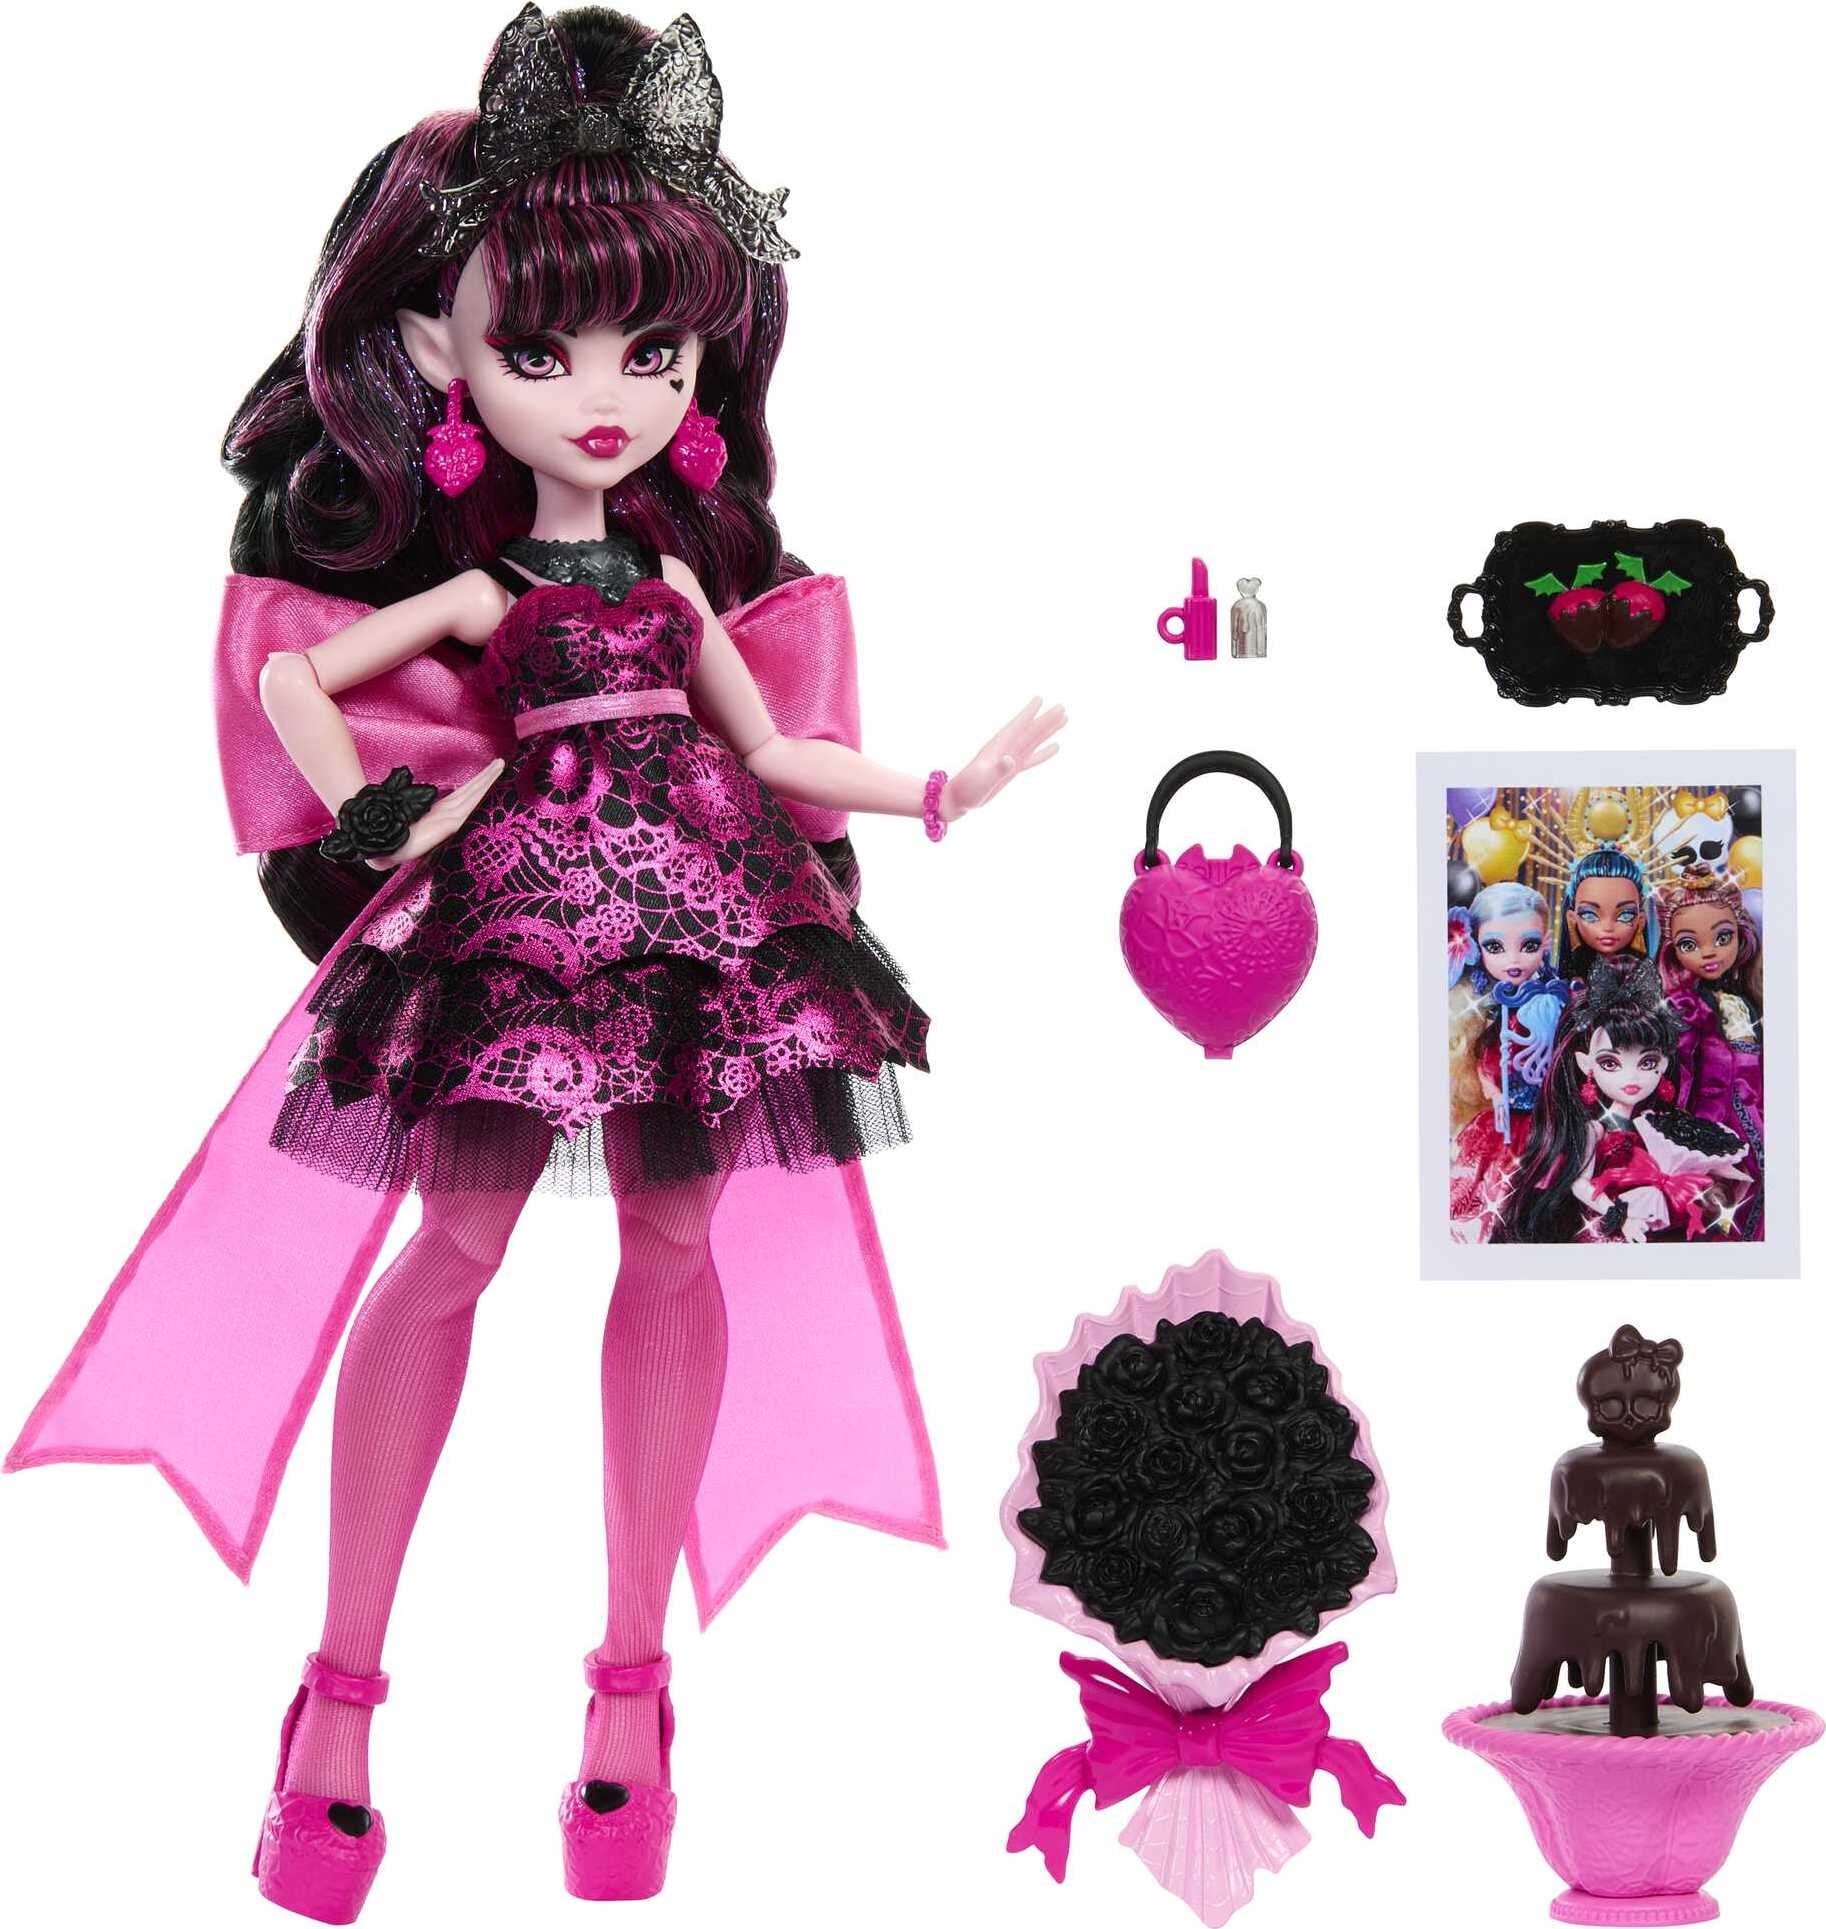 Monster High Dolls in Fashion Dolls   Walmart.com